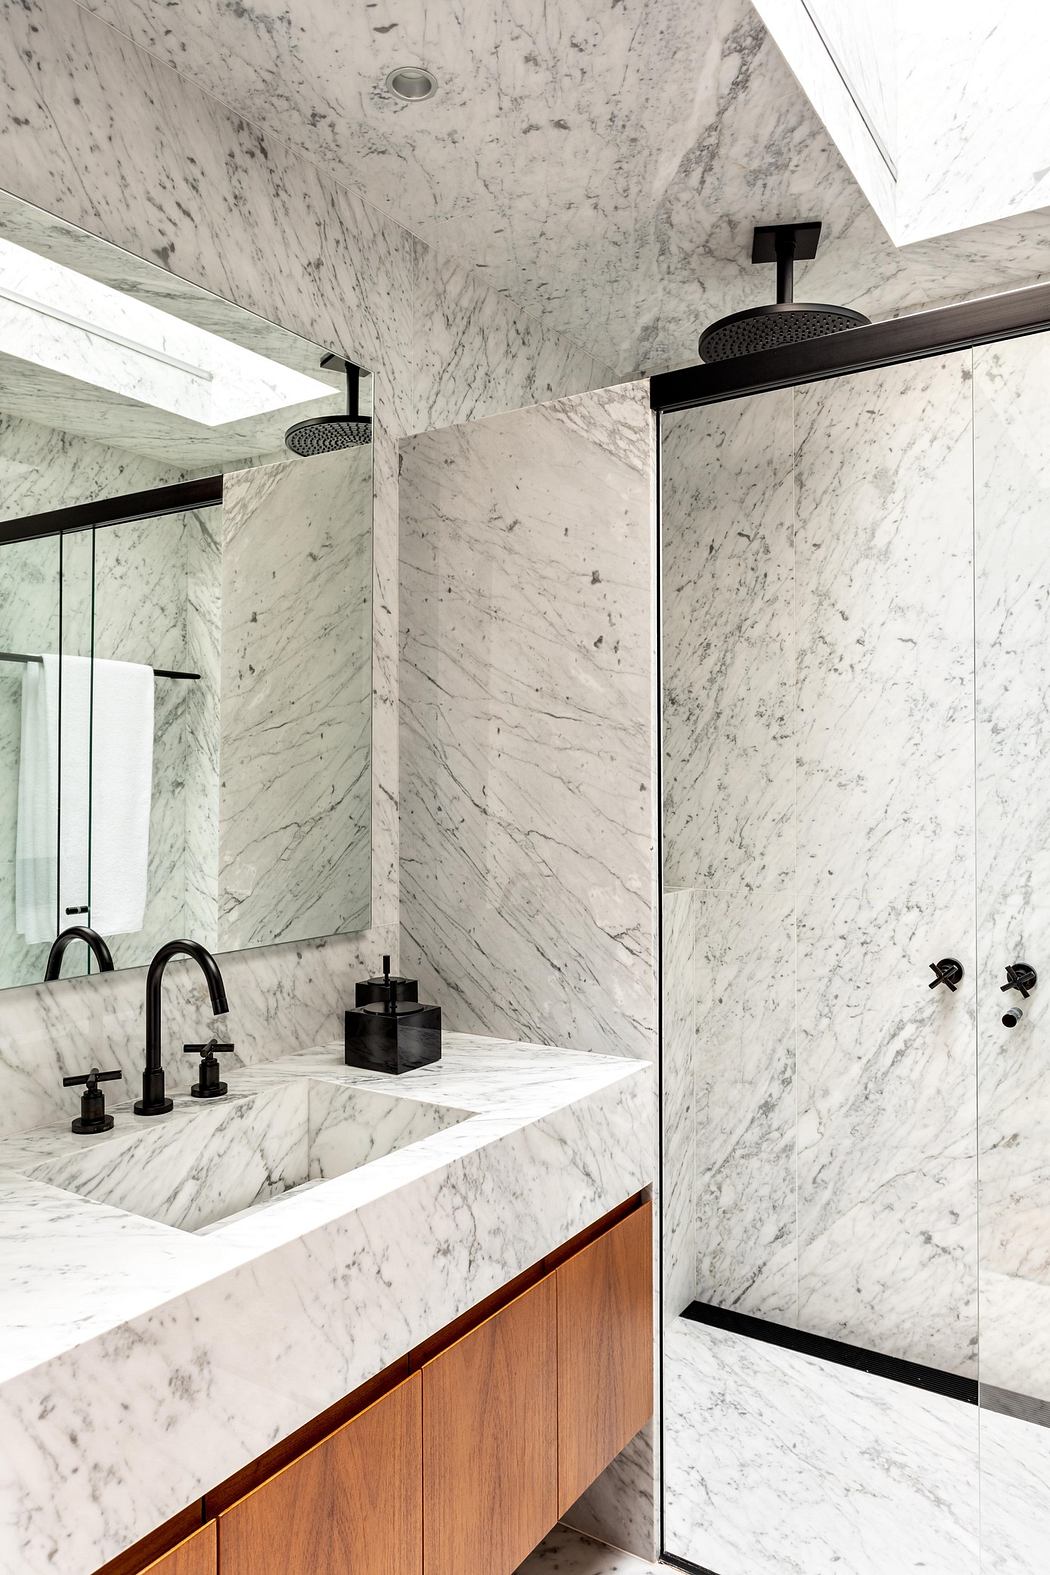 Elegant bathroom with marble walls and wooden vanity.